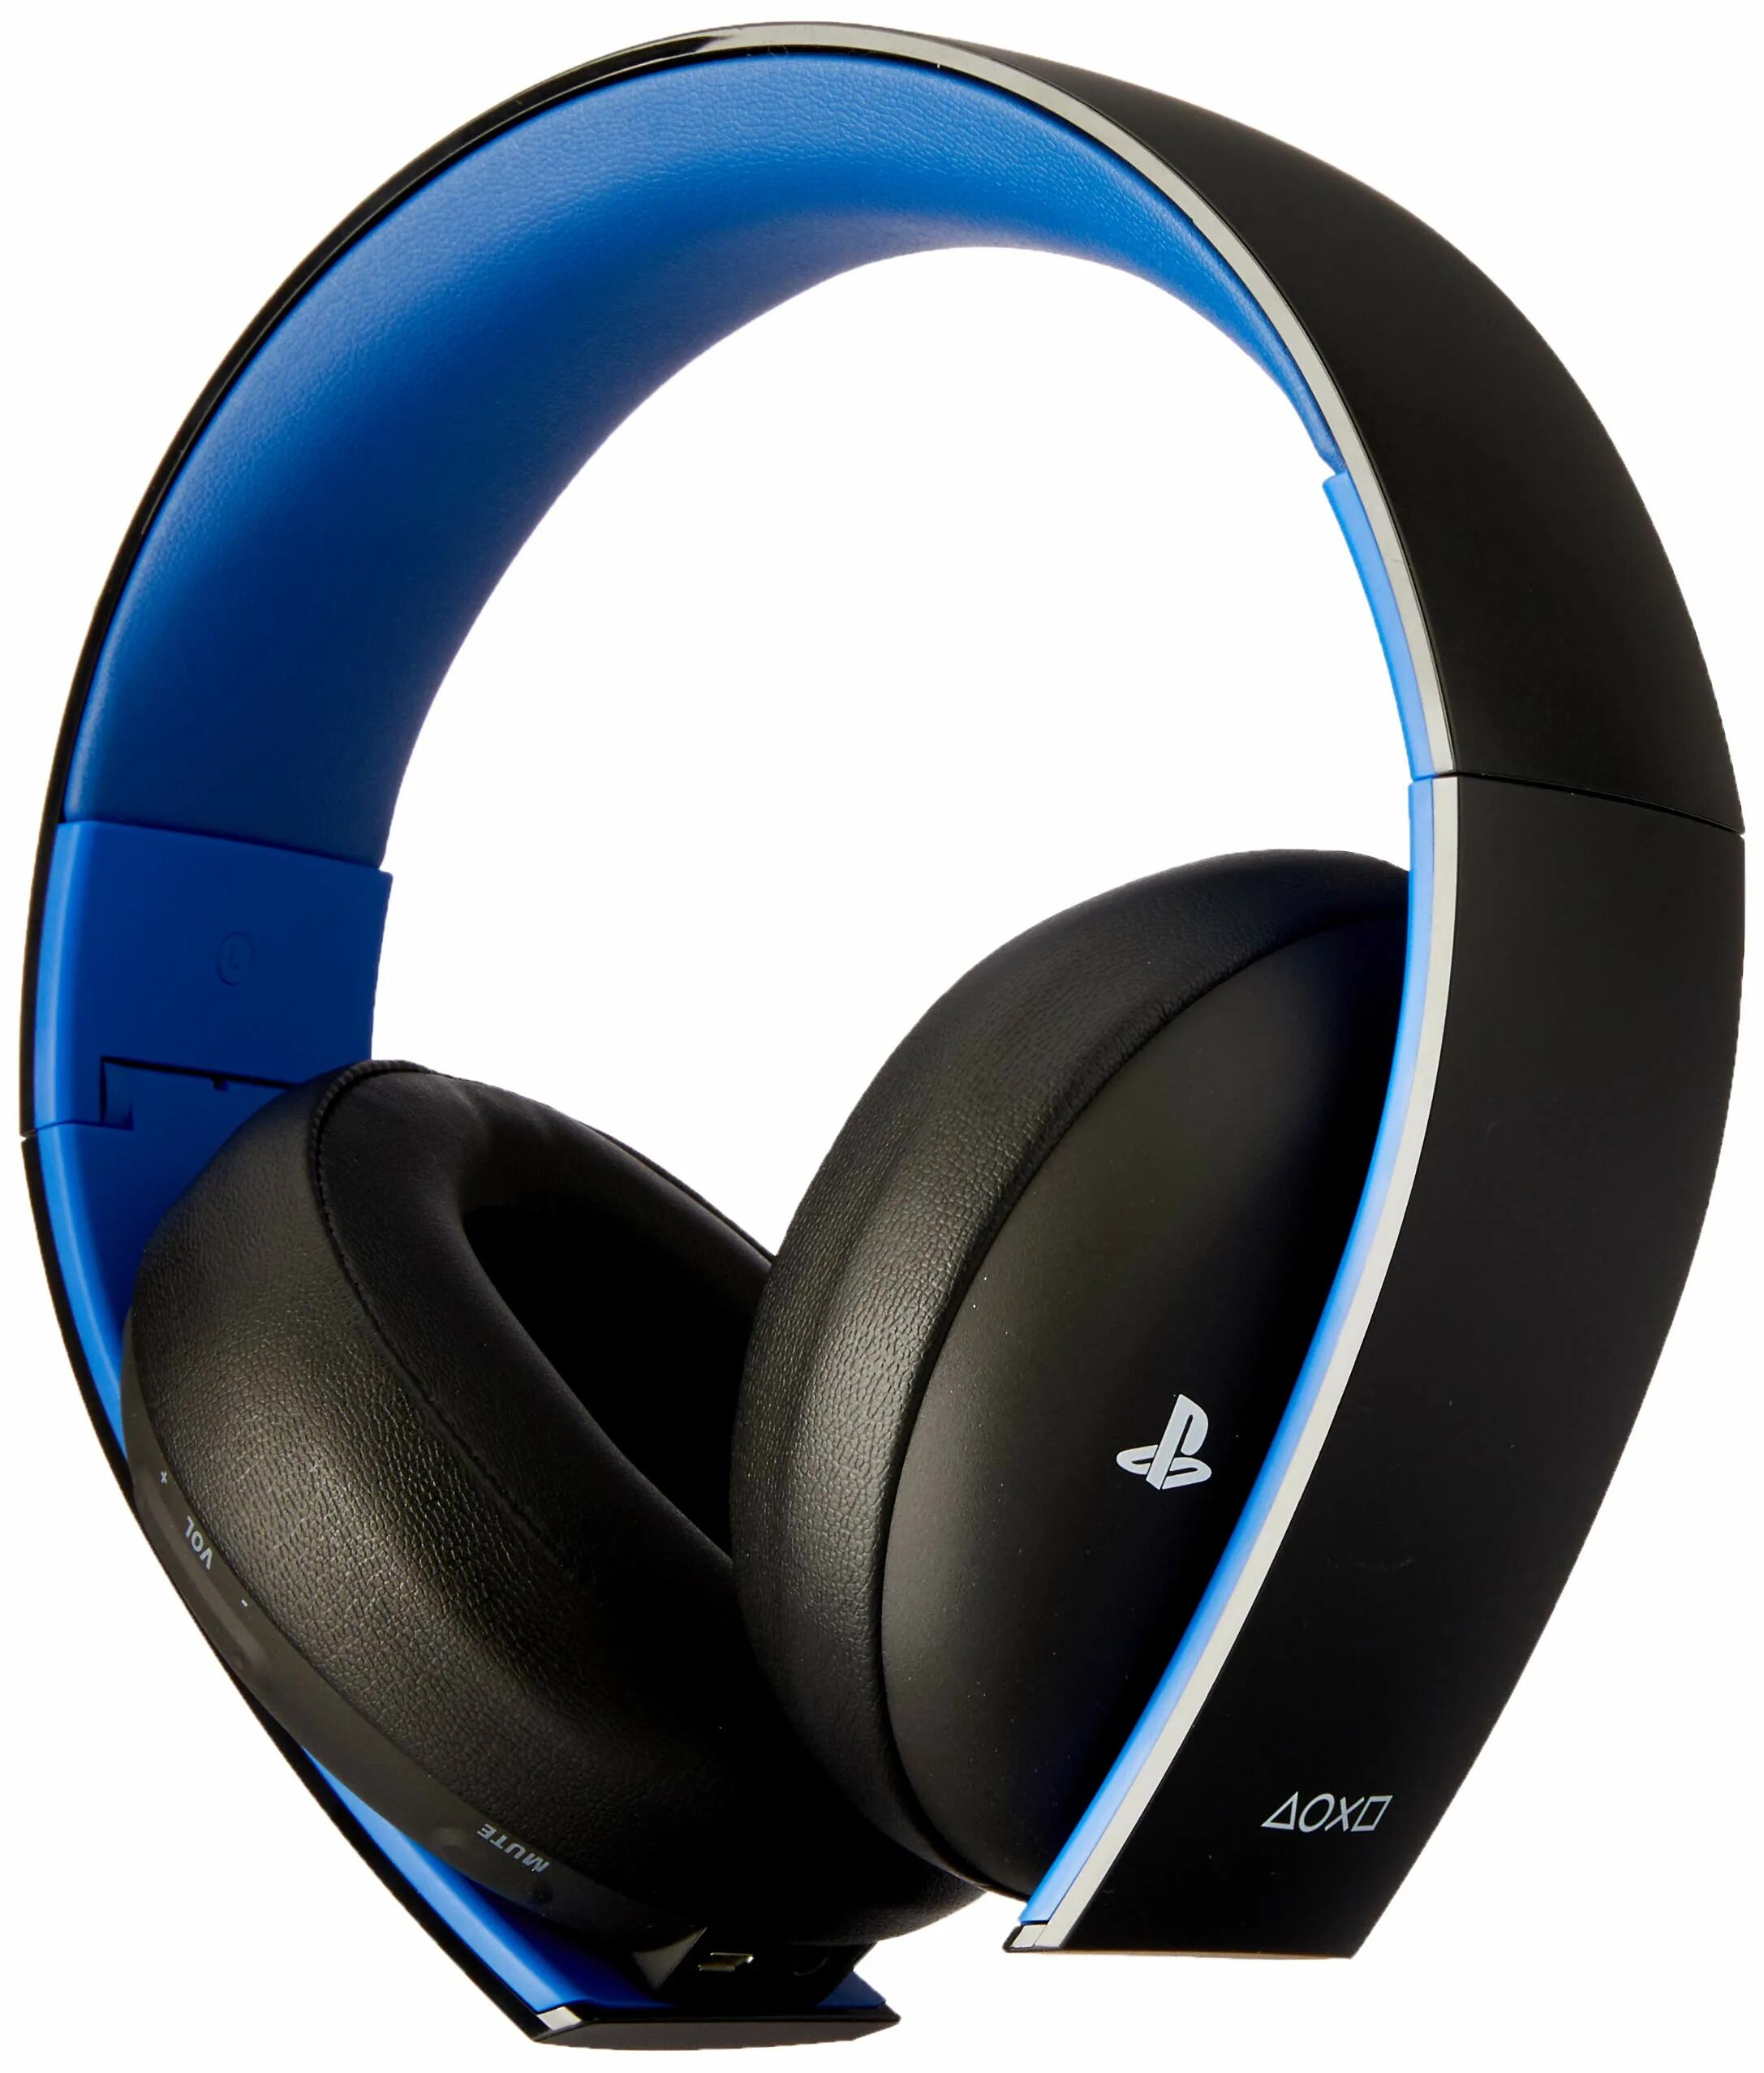 Гарнитура для ps4. Sony PLAYSTATION Wireless stereo Headset 2.0. Sony ps3 Wireless stereo Headset. Наушники Sony ps3 Wireless stereo Headset. Наушники Sony ps4 Gold Wireless Headset.